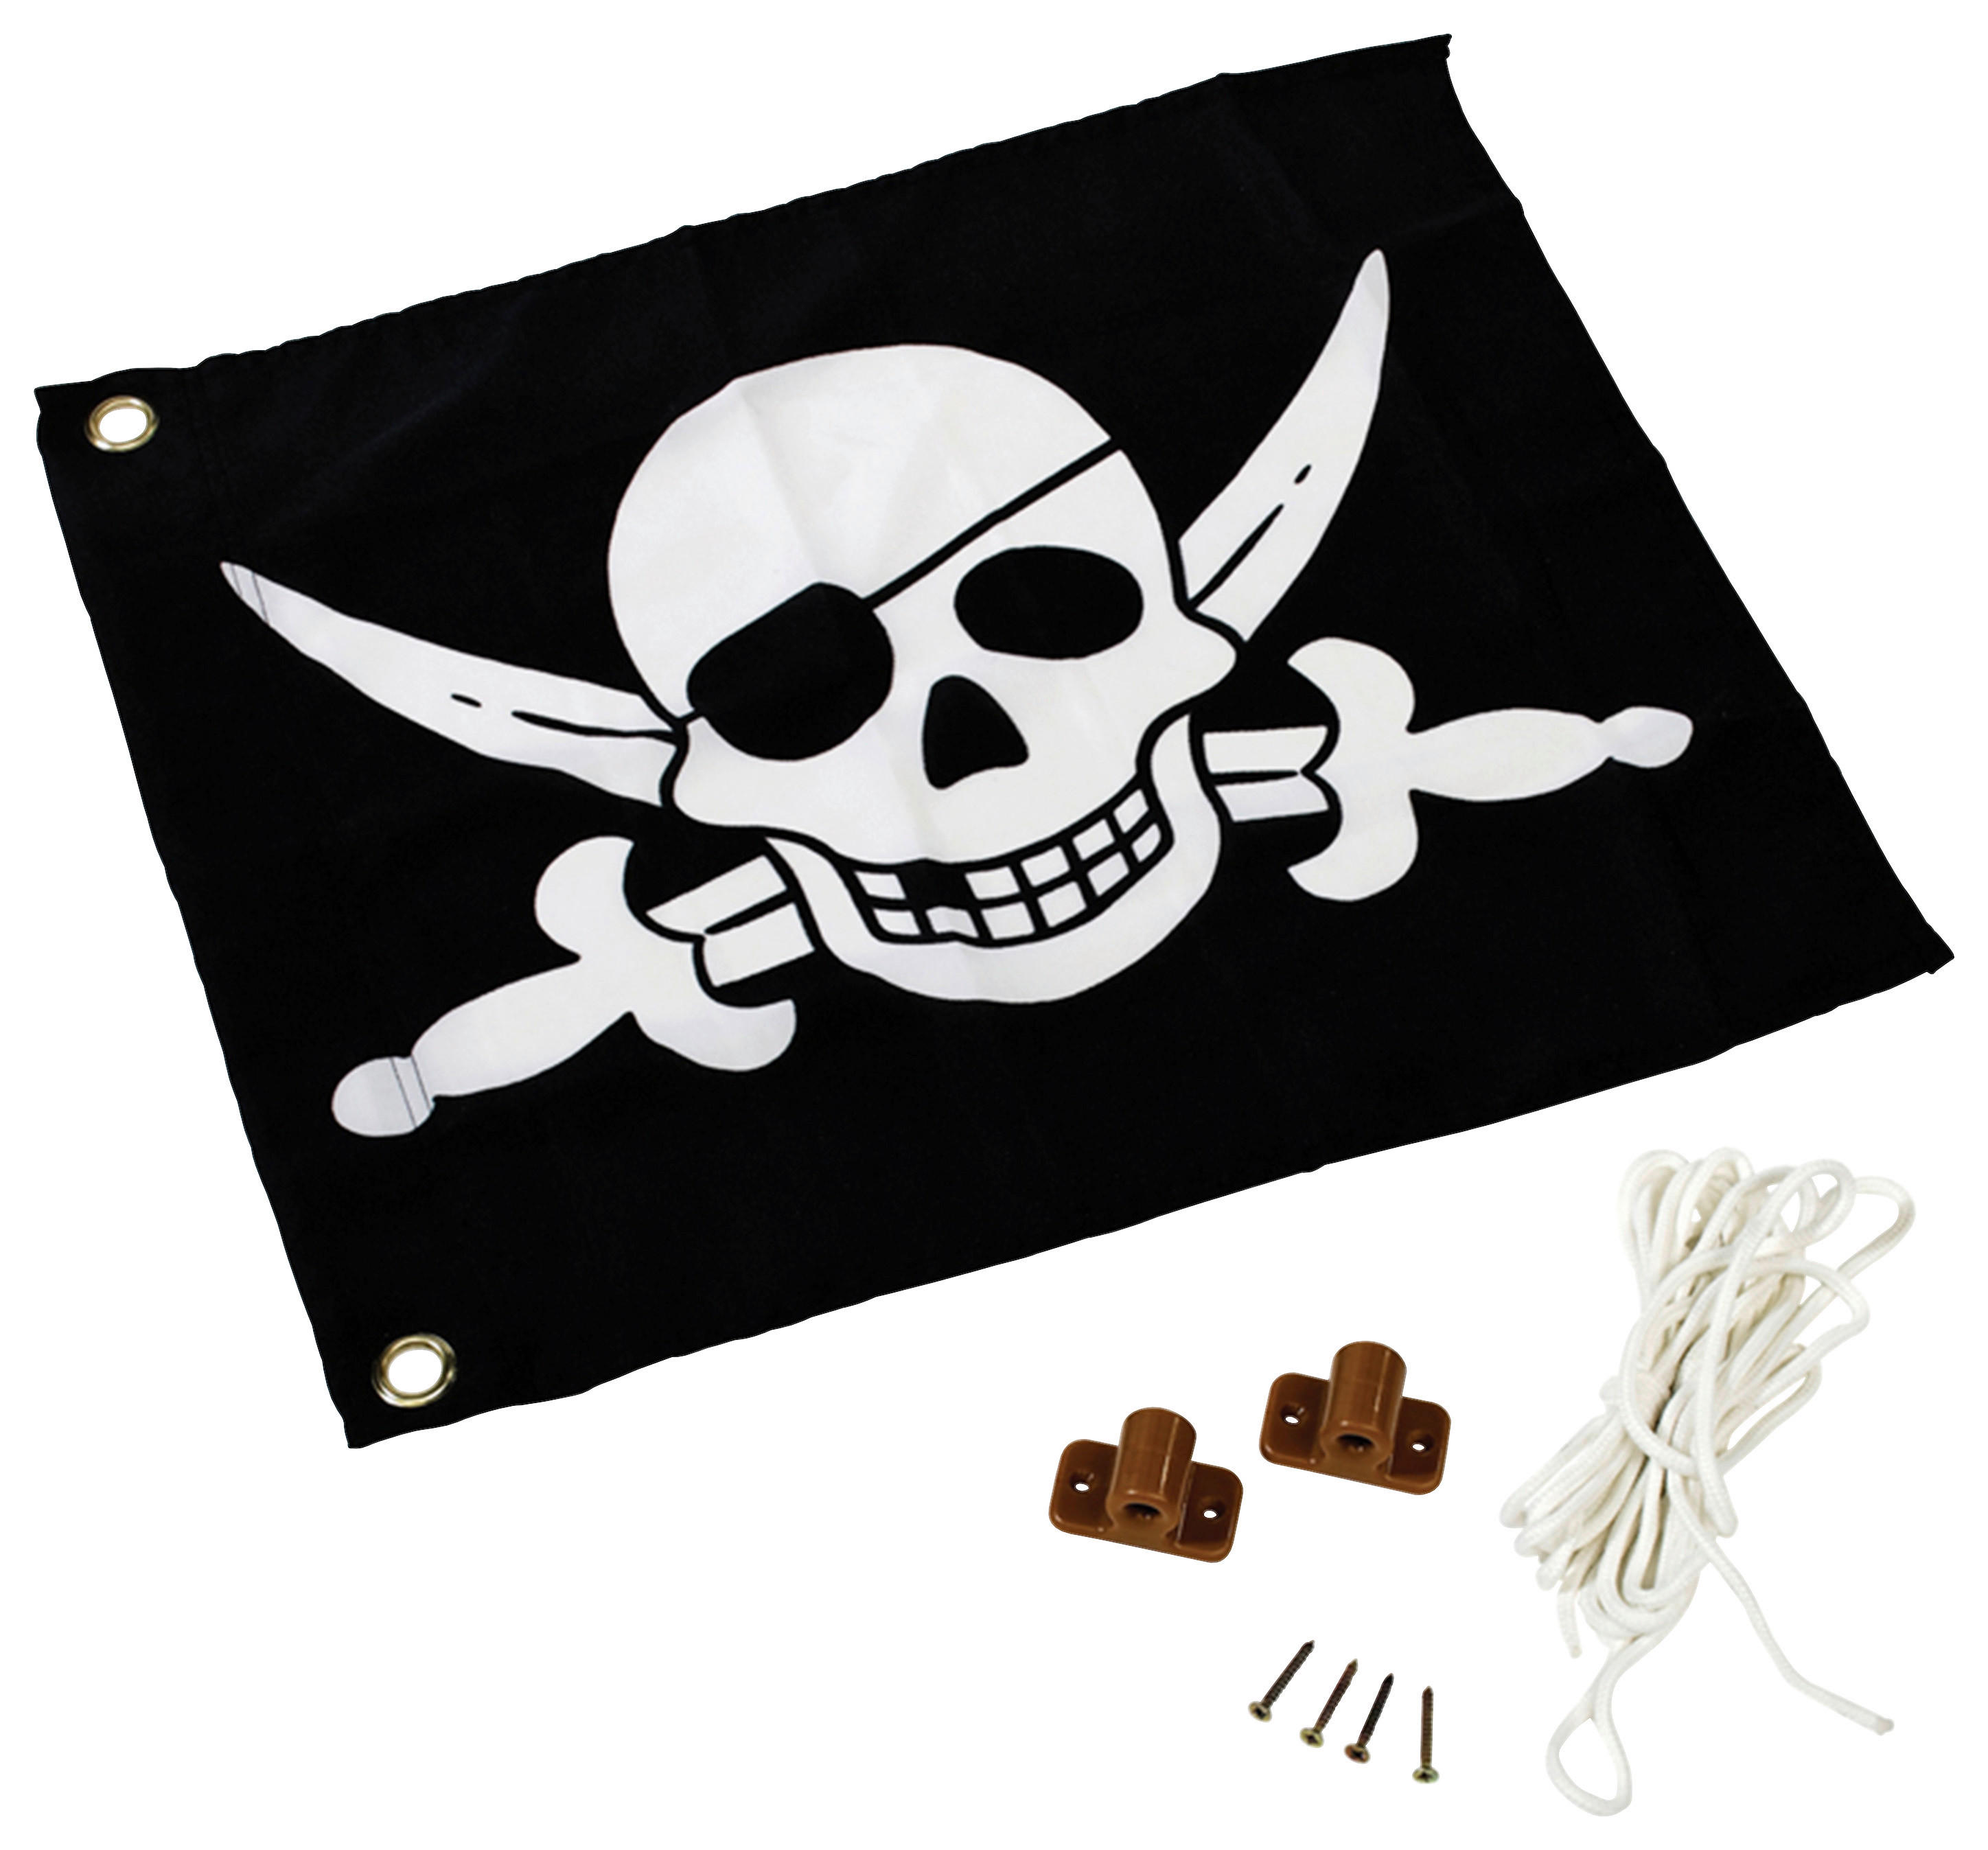 Piraten Flagge 45x30cm. Lieferung 24h